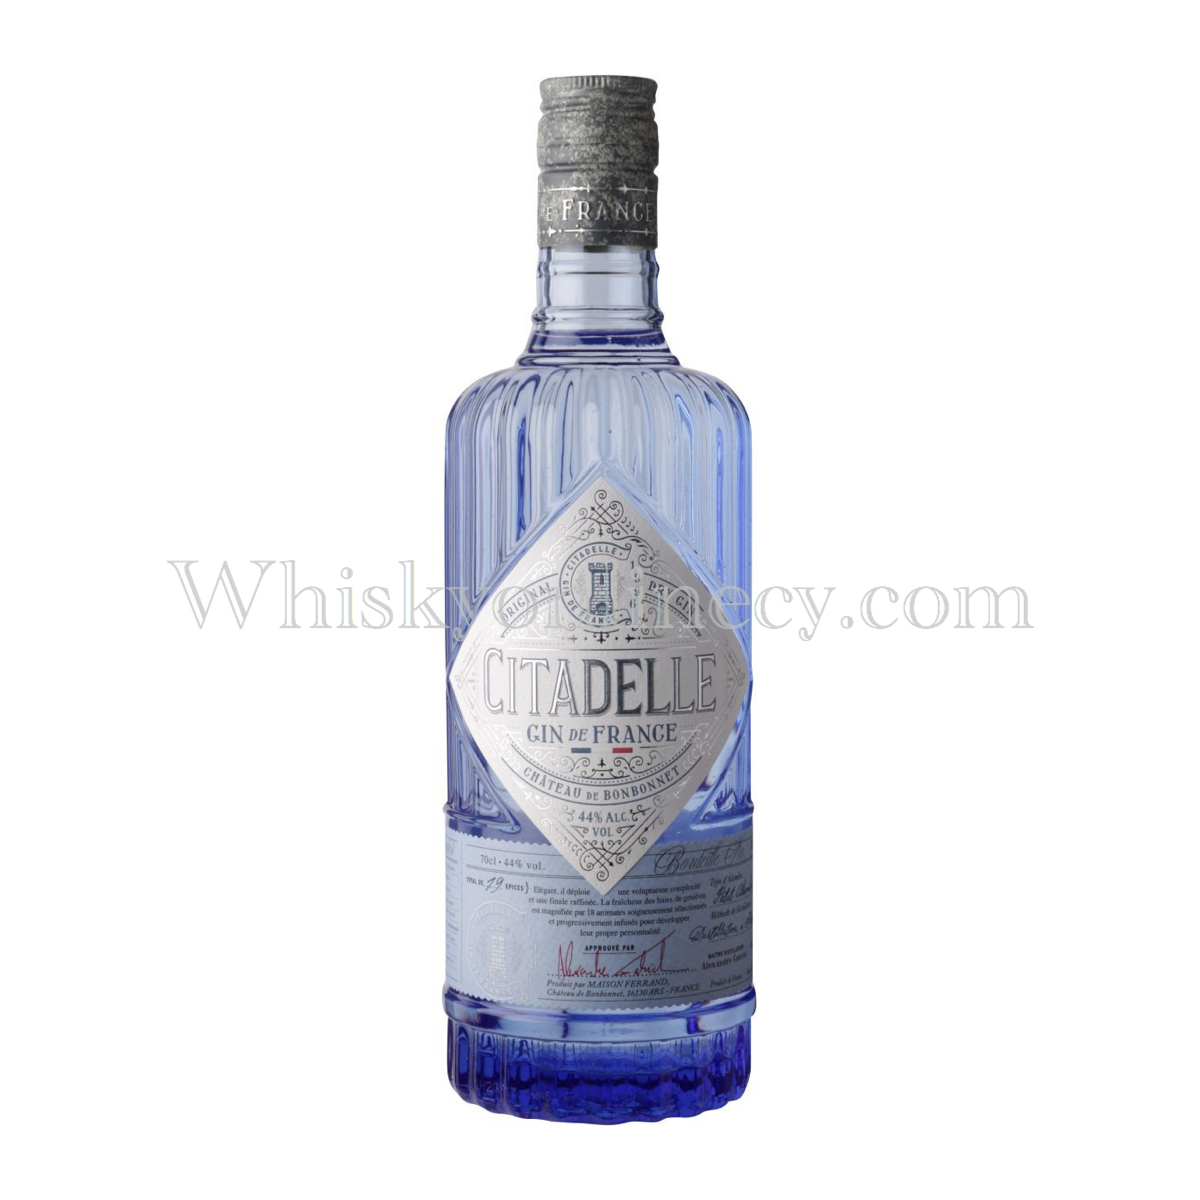 Whisky Online Cyprus - Citadelle Gin (1L, 44%)